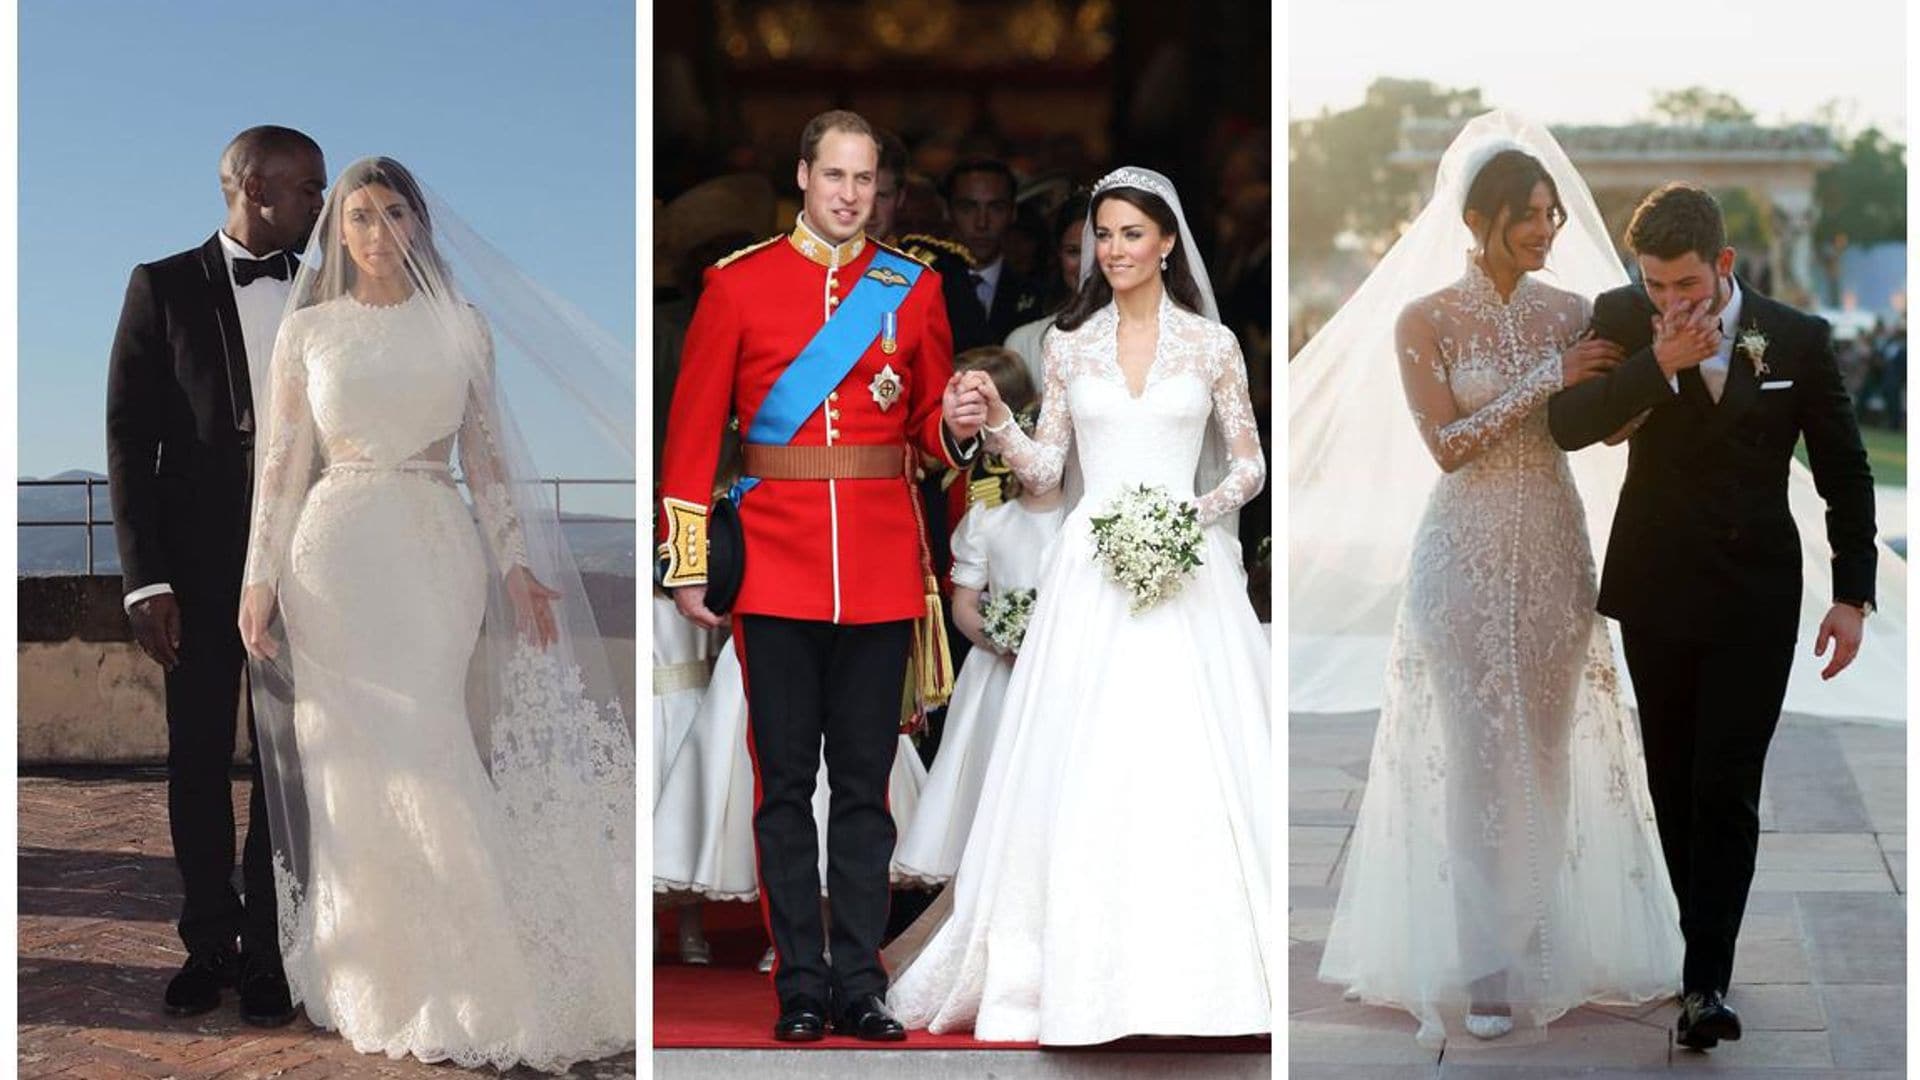 Kim Kardashian, Kate Middleton, and Priyanka Chopra in their wedding dresses